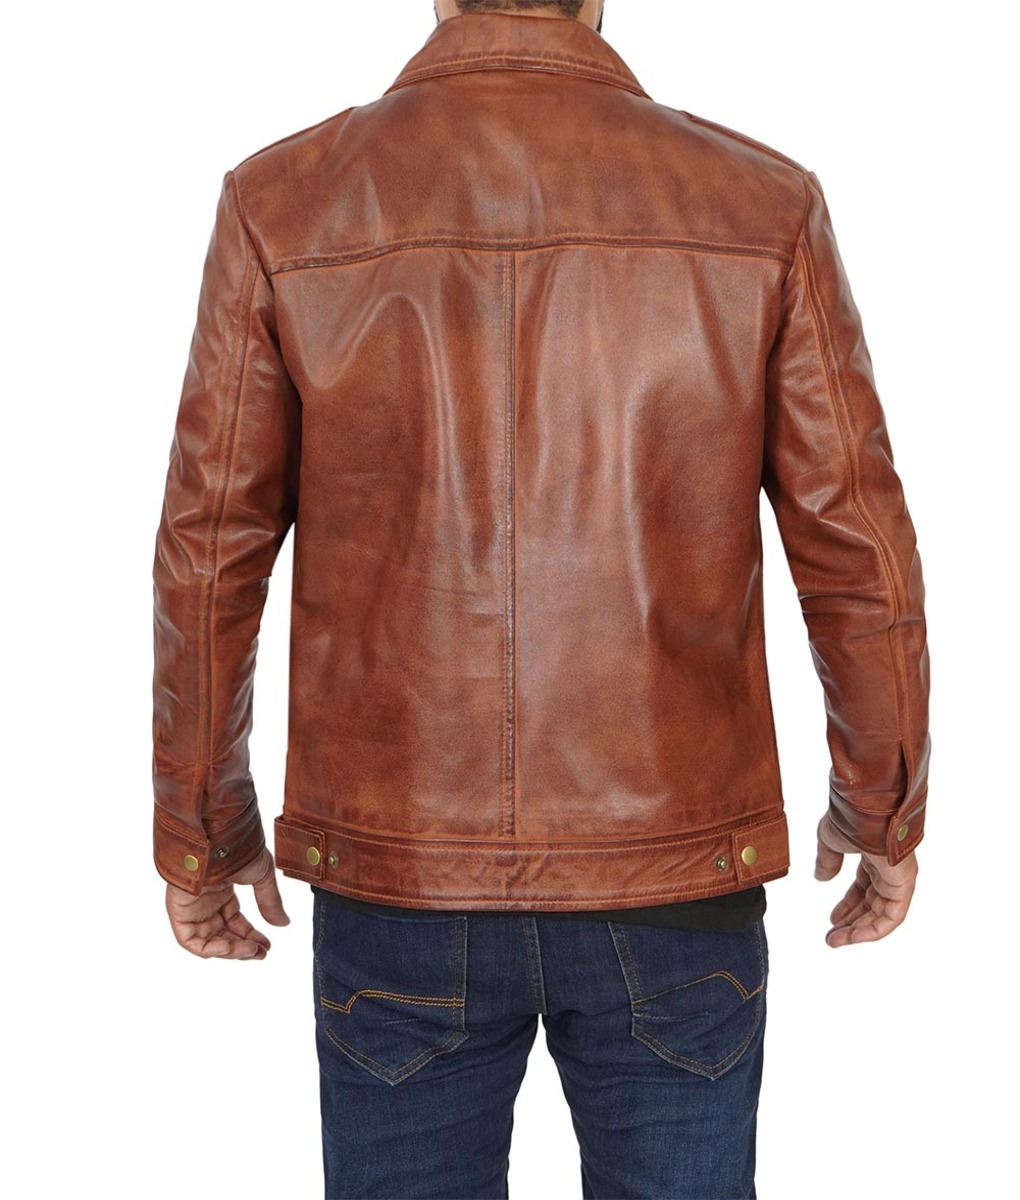 mens_John_Wick_style_brown_tan_leather_jacket